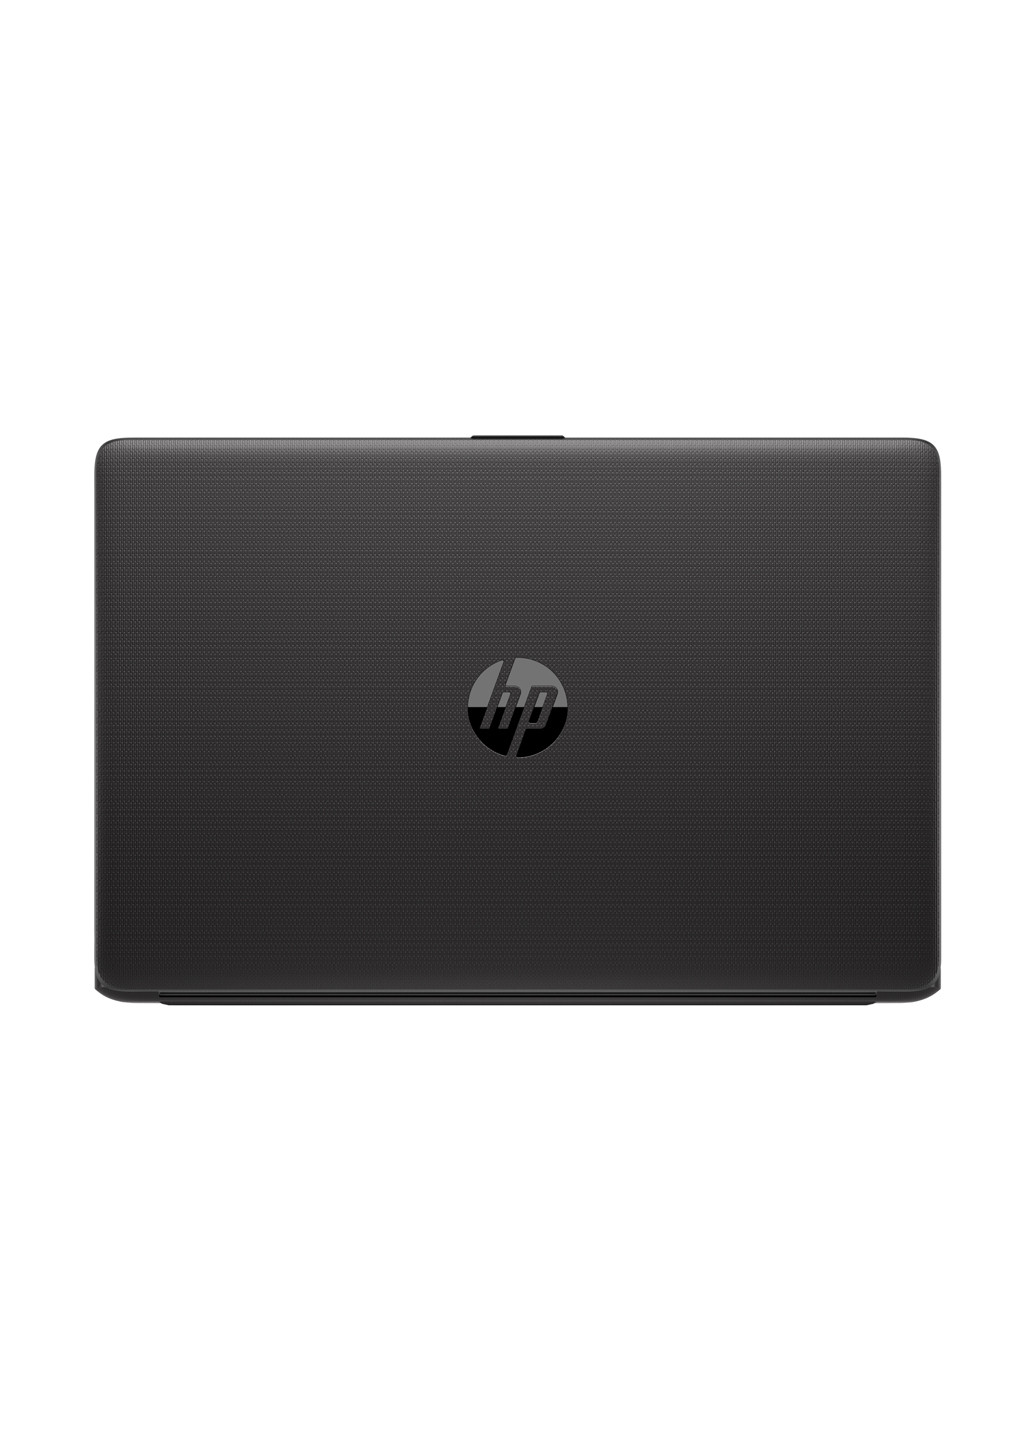 Ноутбук Dark Ash Silver HP 255 g7 (6bp86es) (130617455)